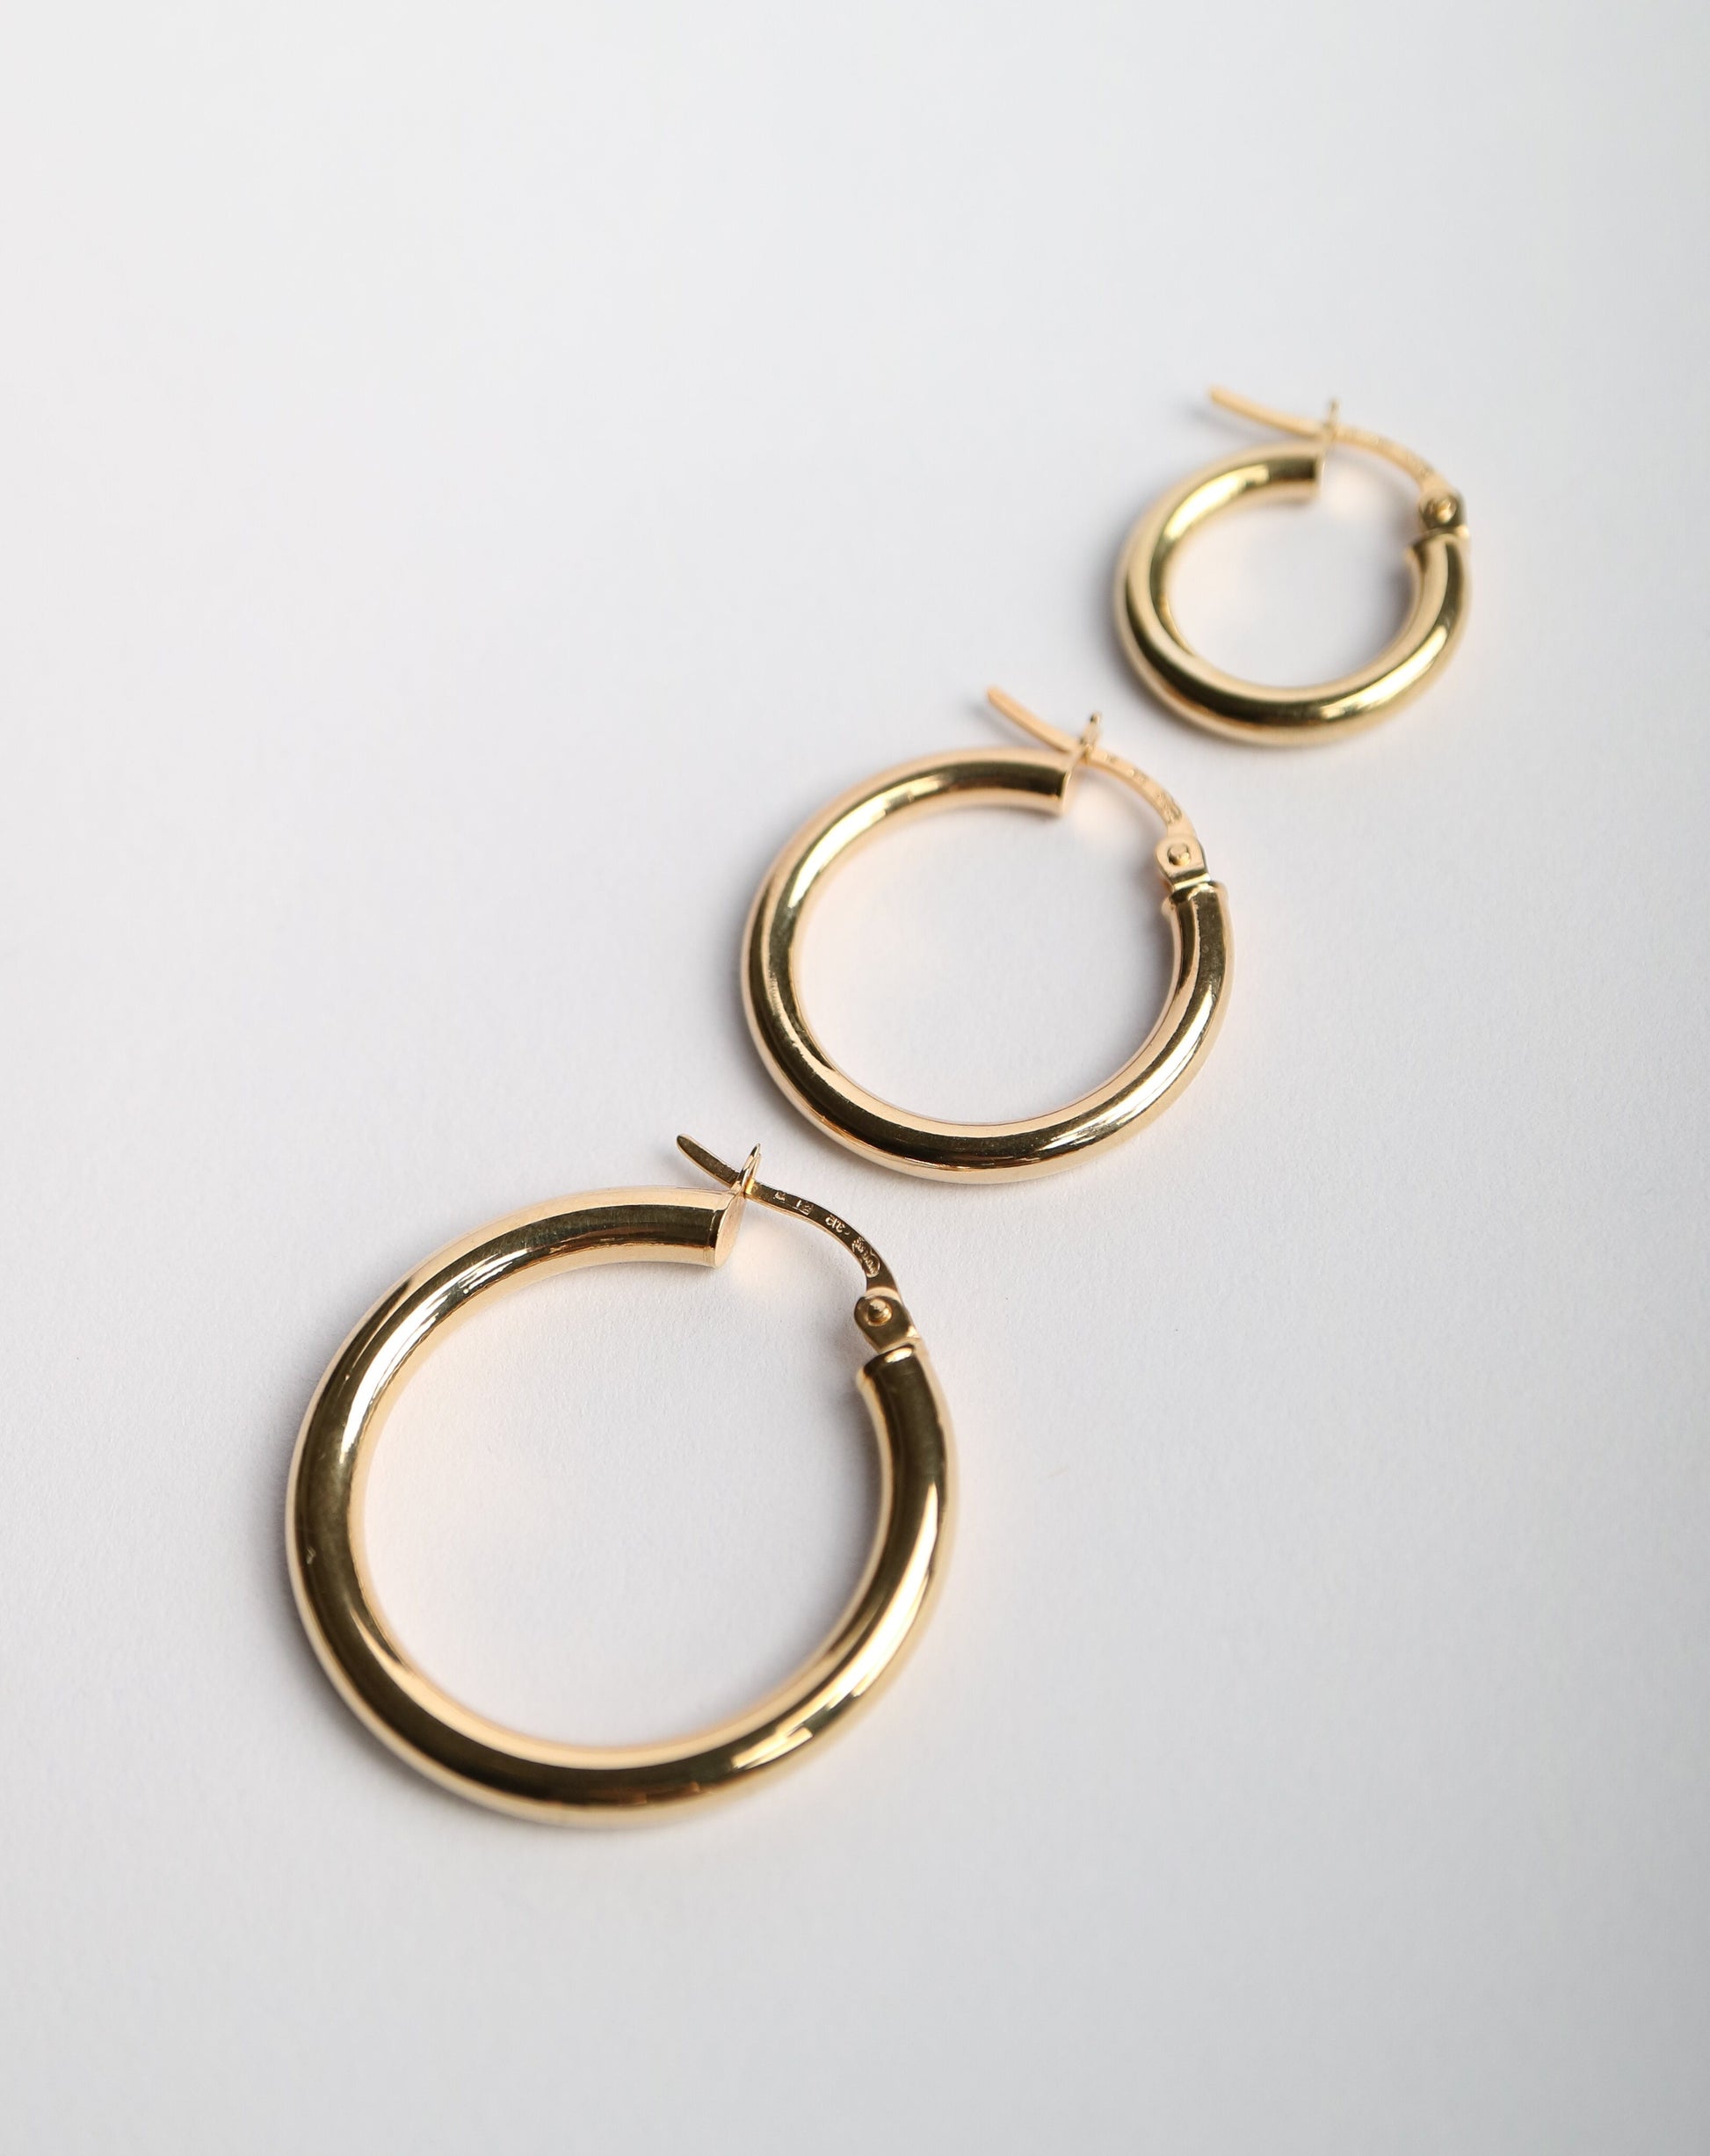 9ct gold Hoop Earrings in all sizes